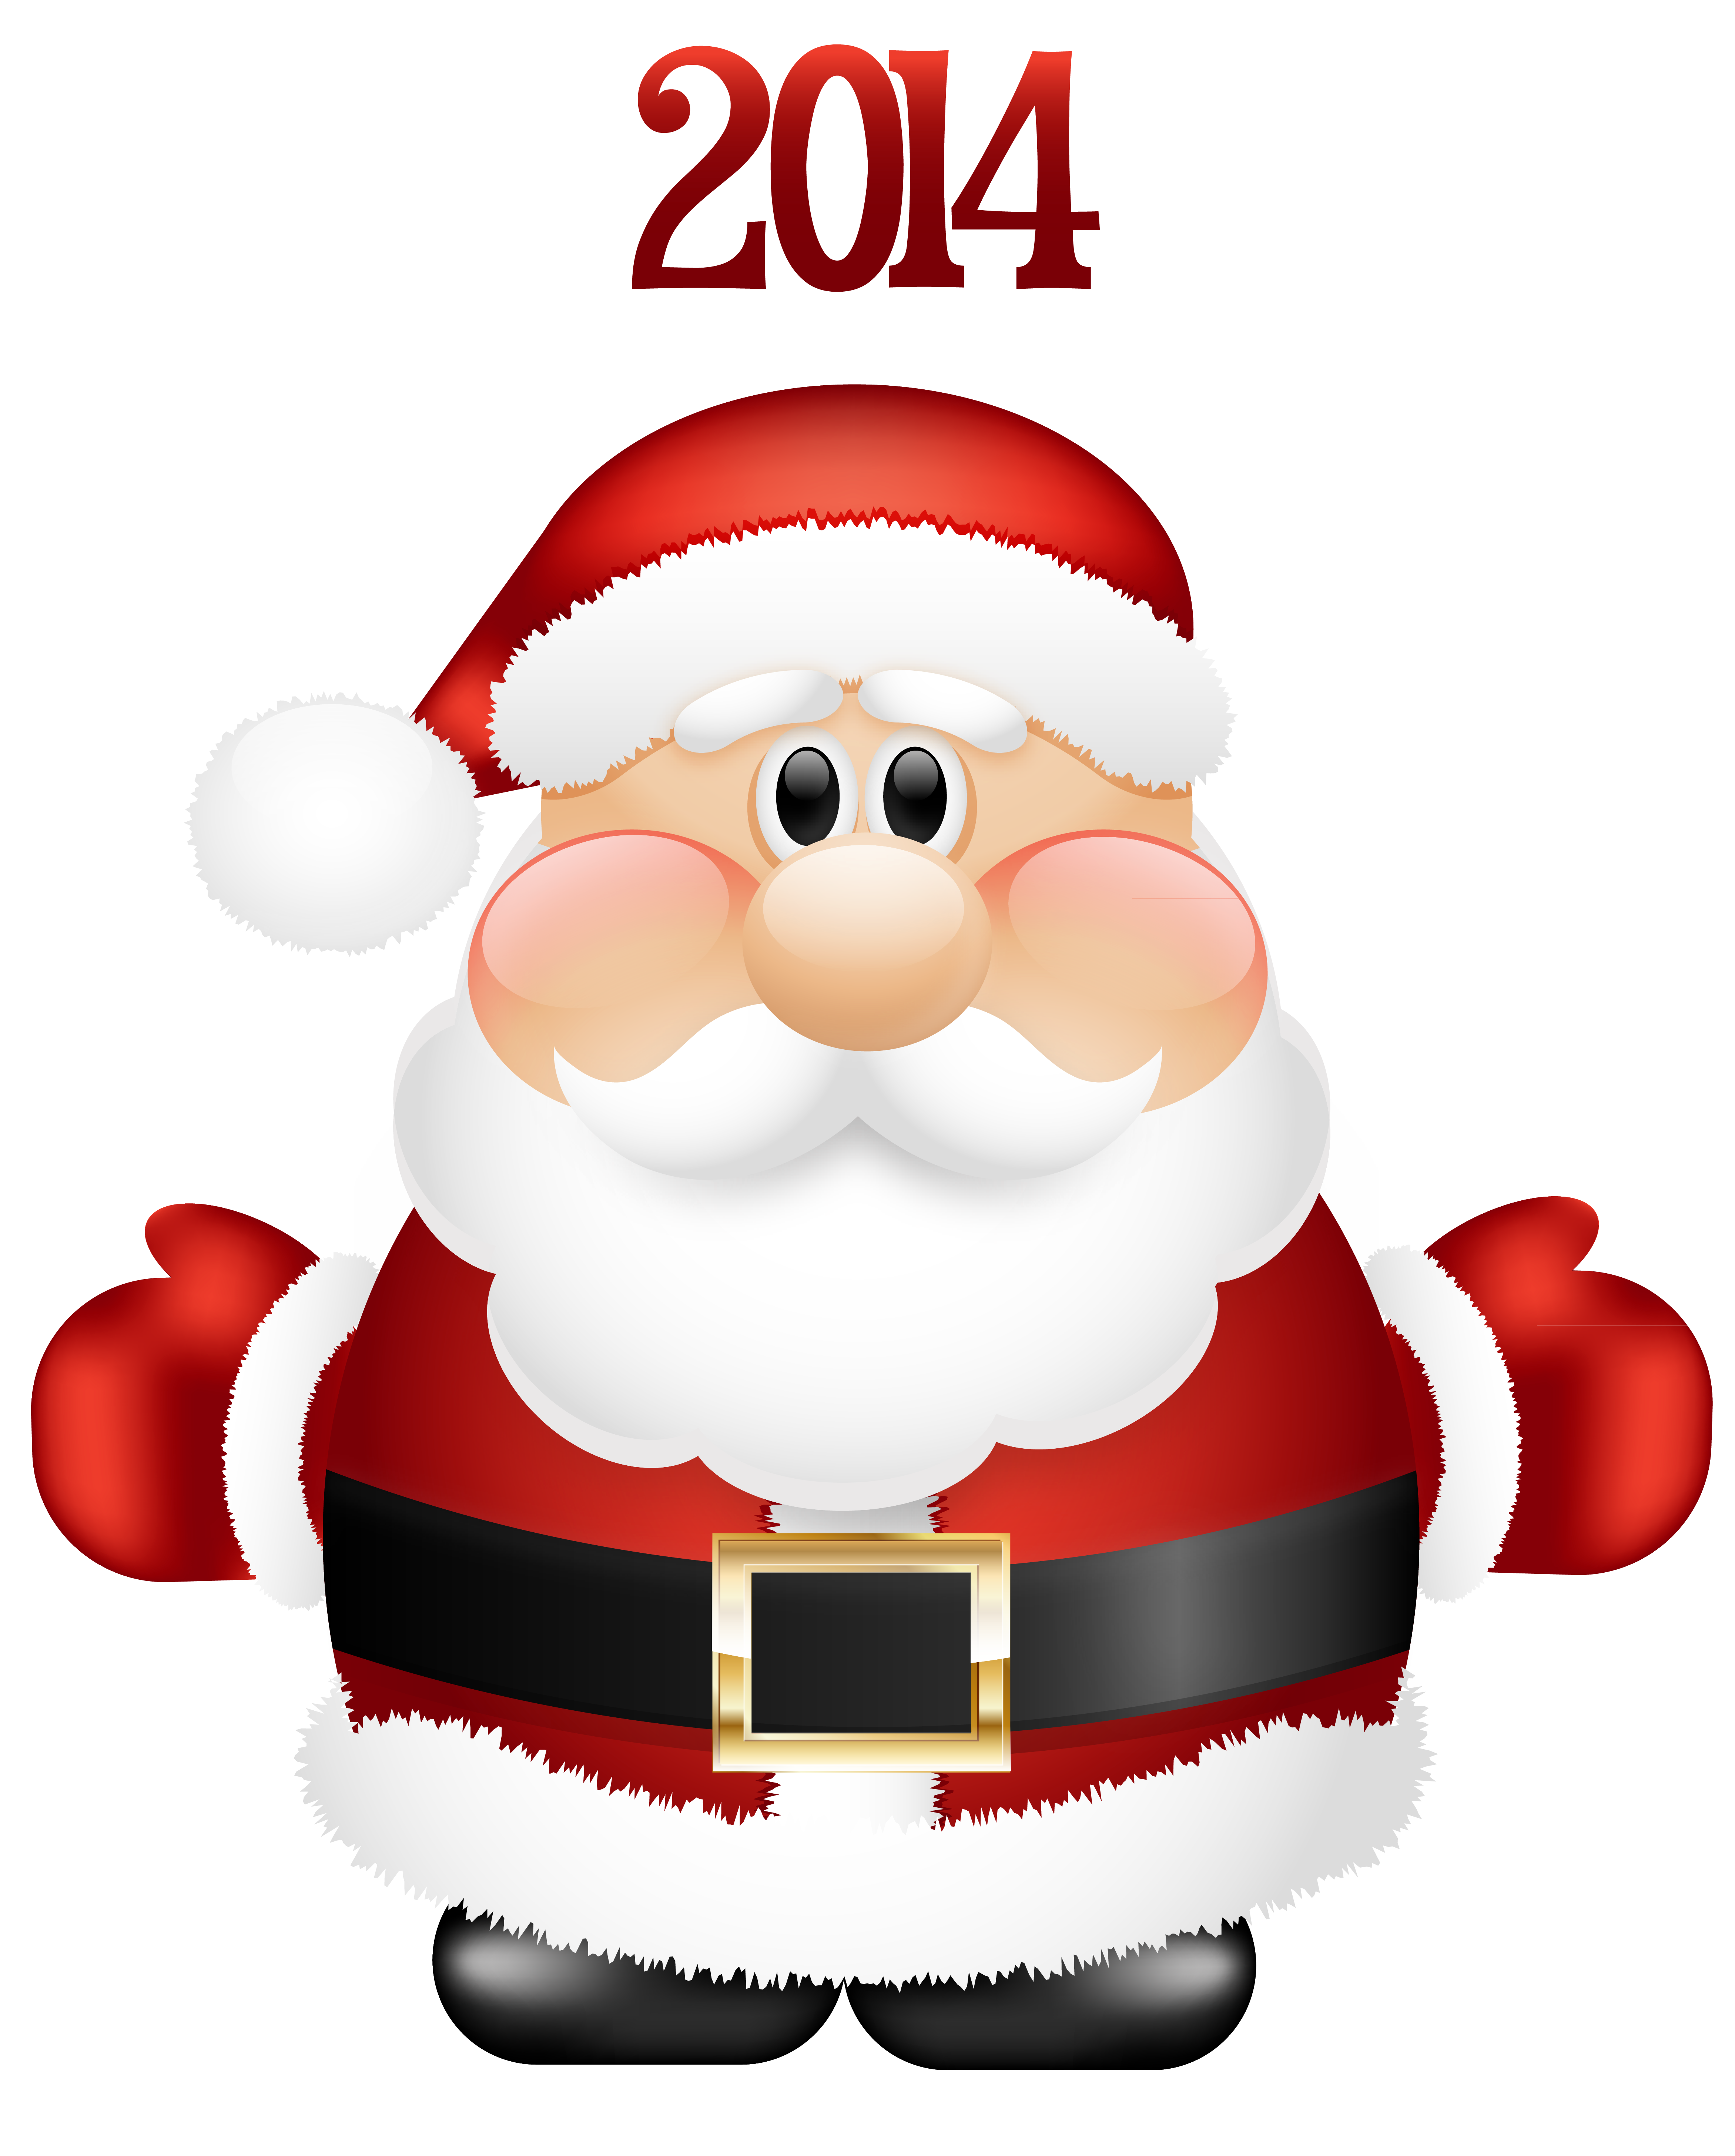 Transparent Cute Santa Claus 2014 PNG Clipart